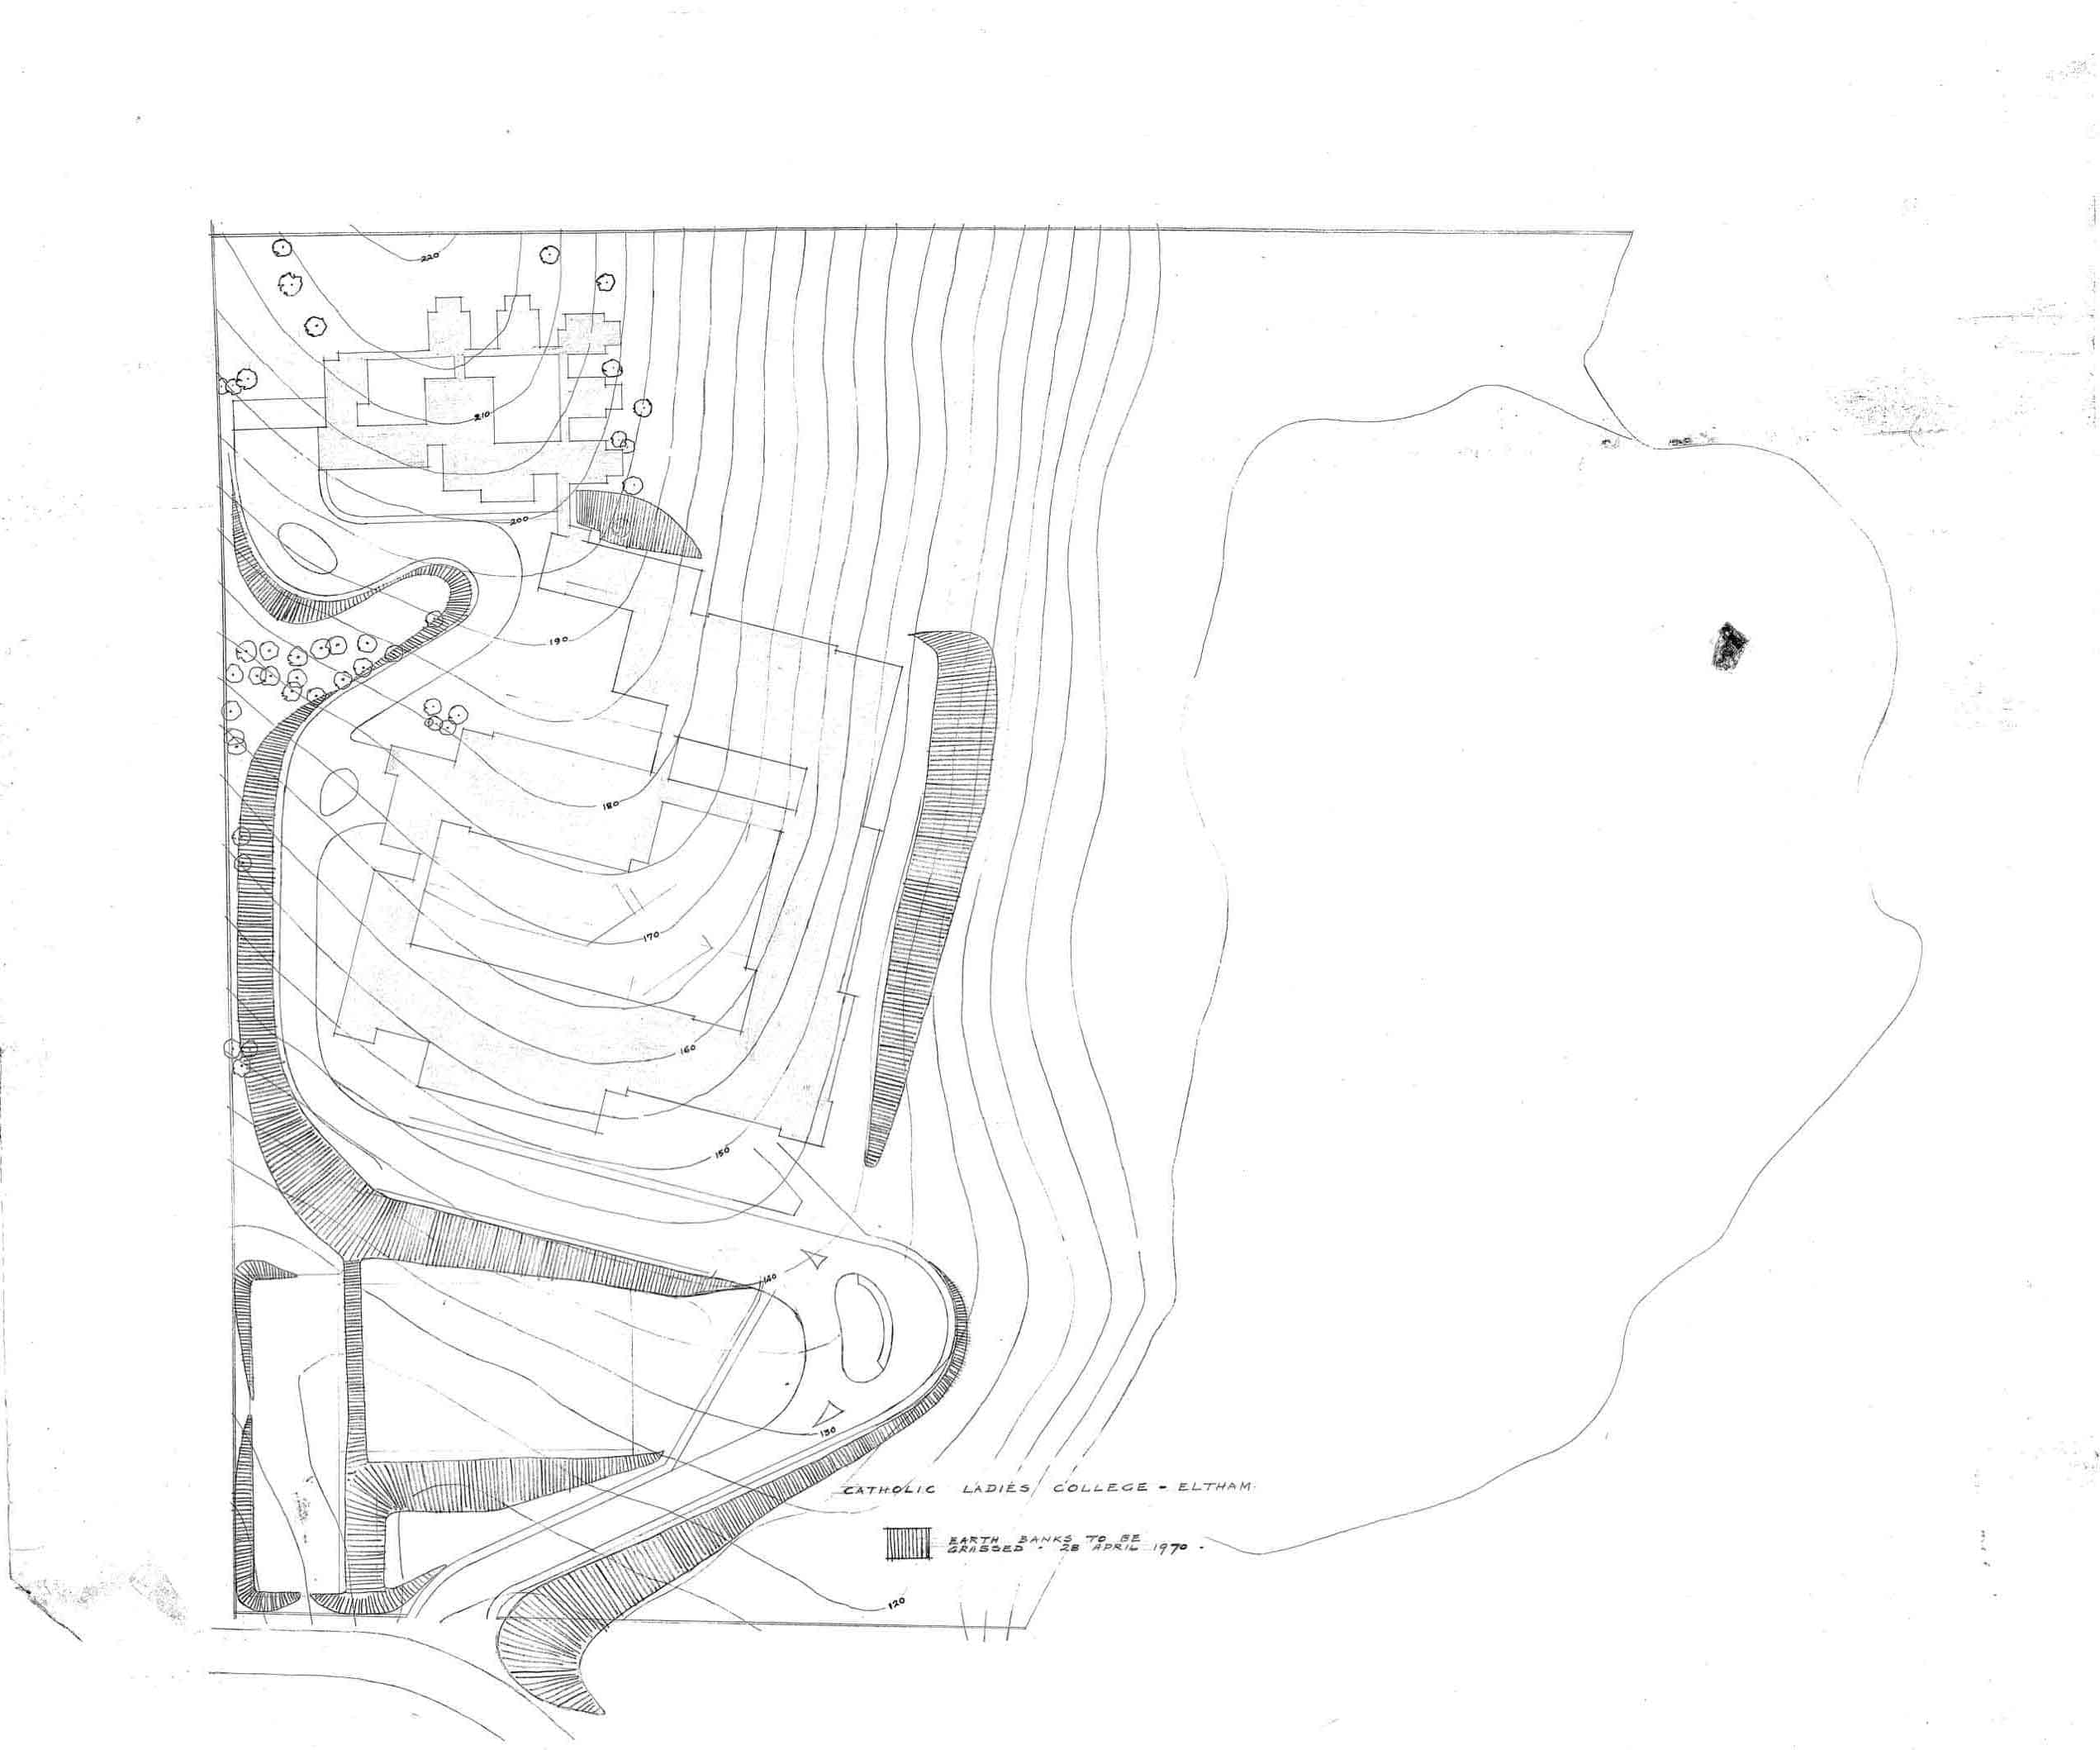 Dean, 1: site plan with contours